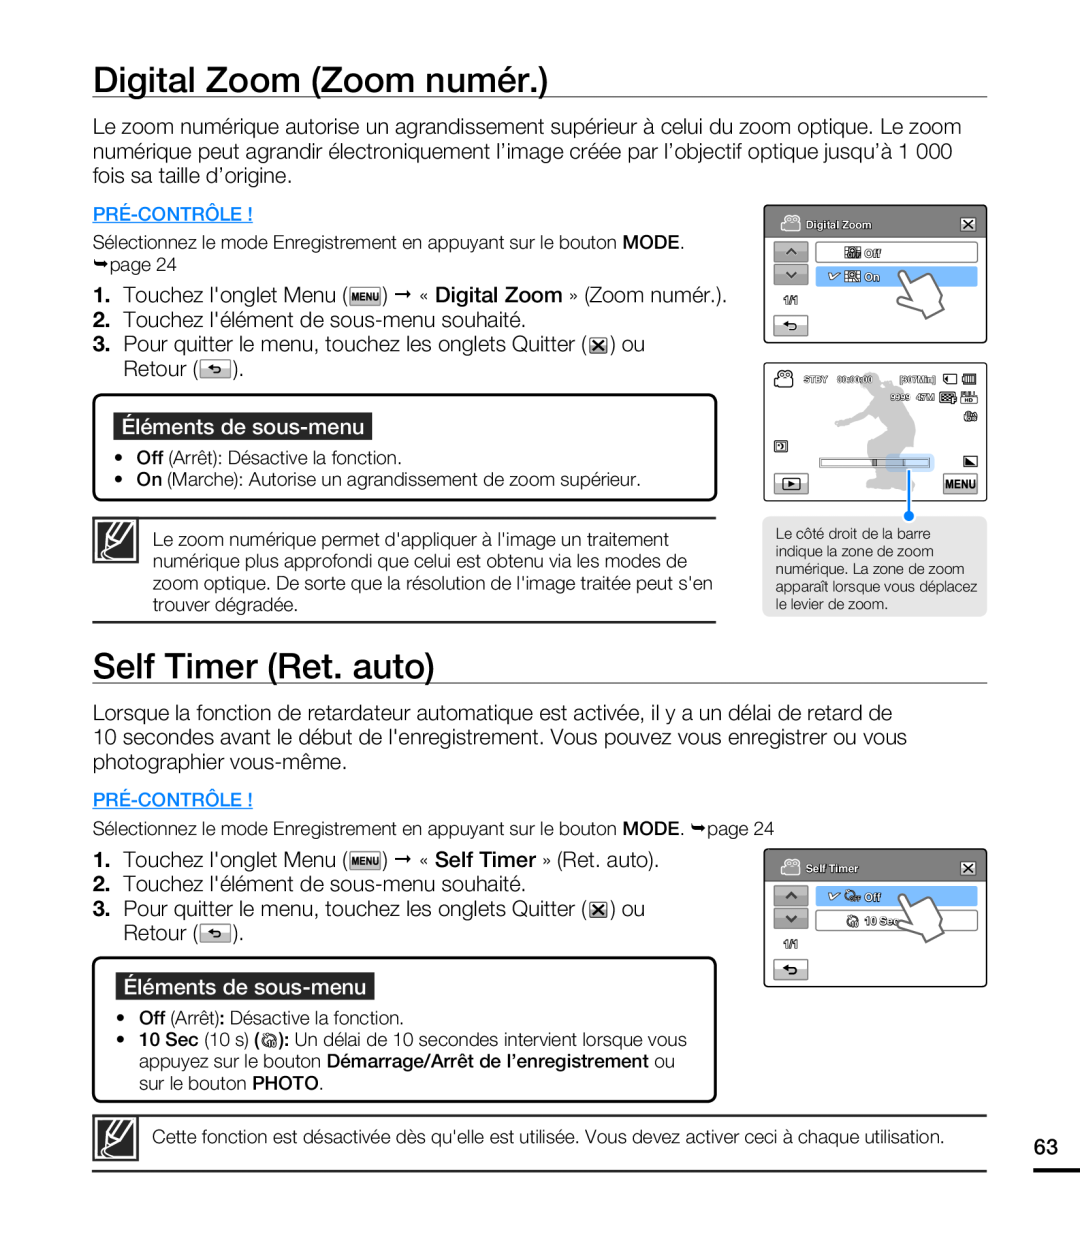 Samsung HMX-T10OP/EDC manual Digital Zoom Zoom numér, Self Timer Ret. auto, Éléments de sous-menu, Digital Zoom Off On 1/1 